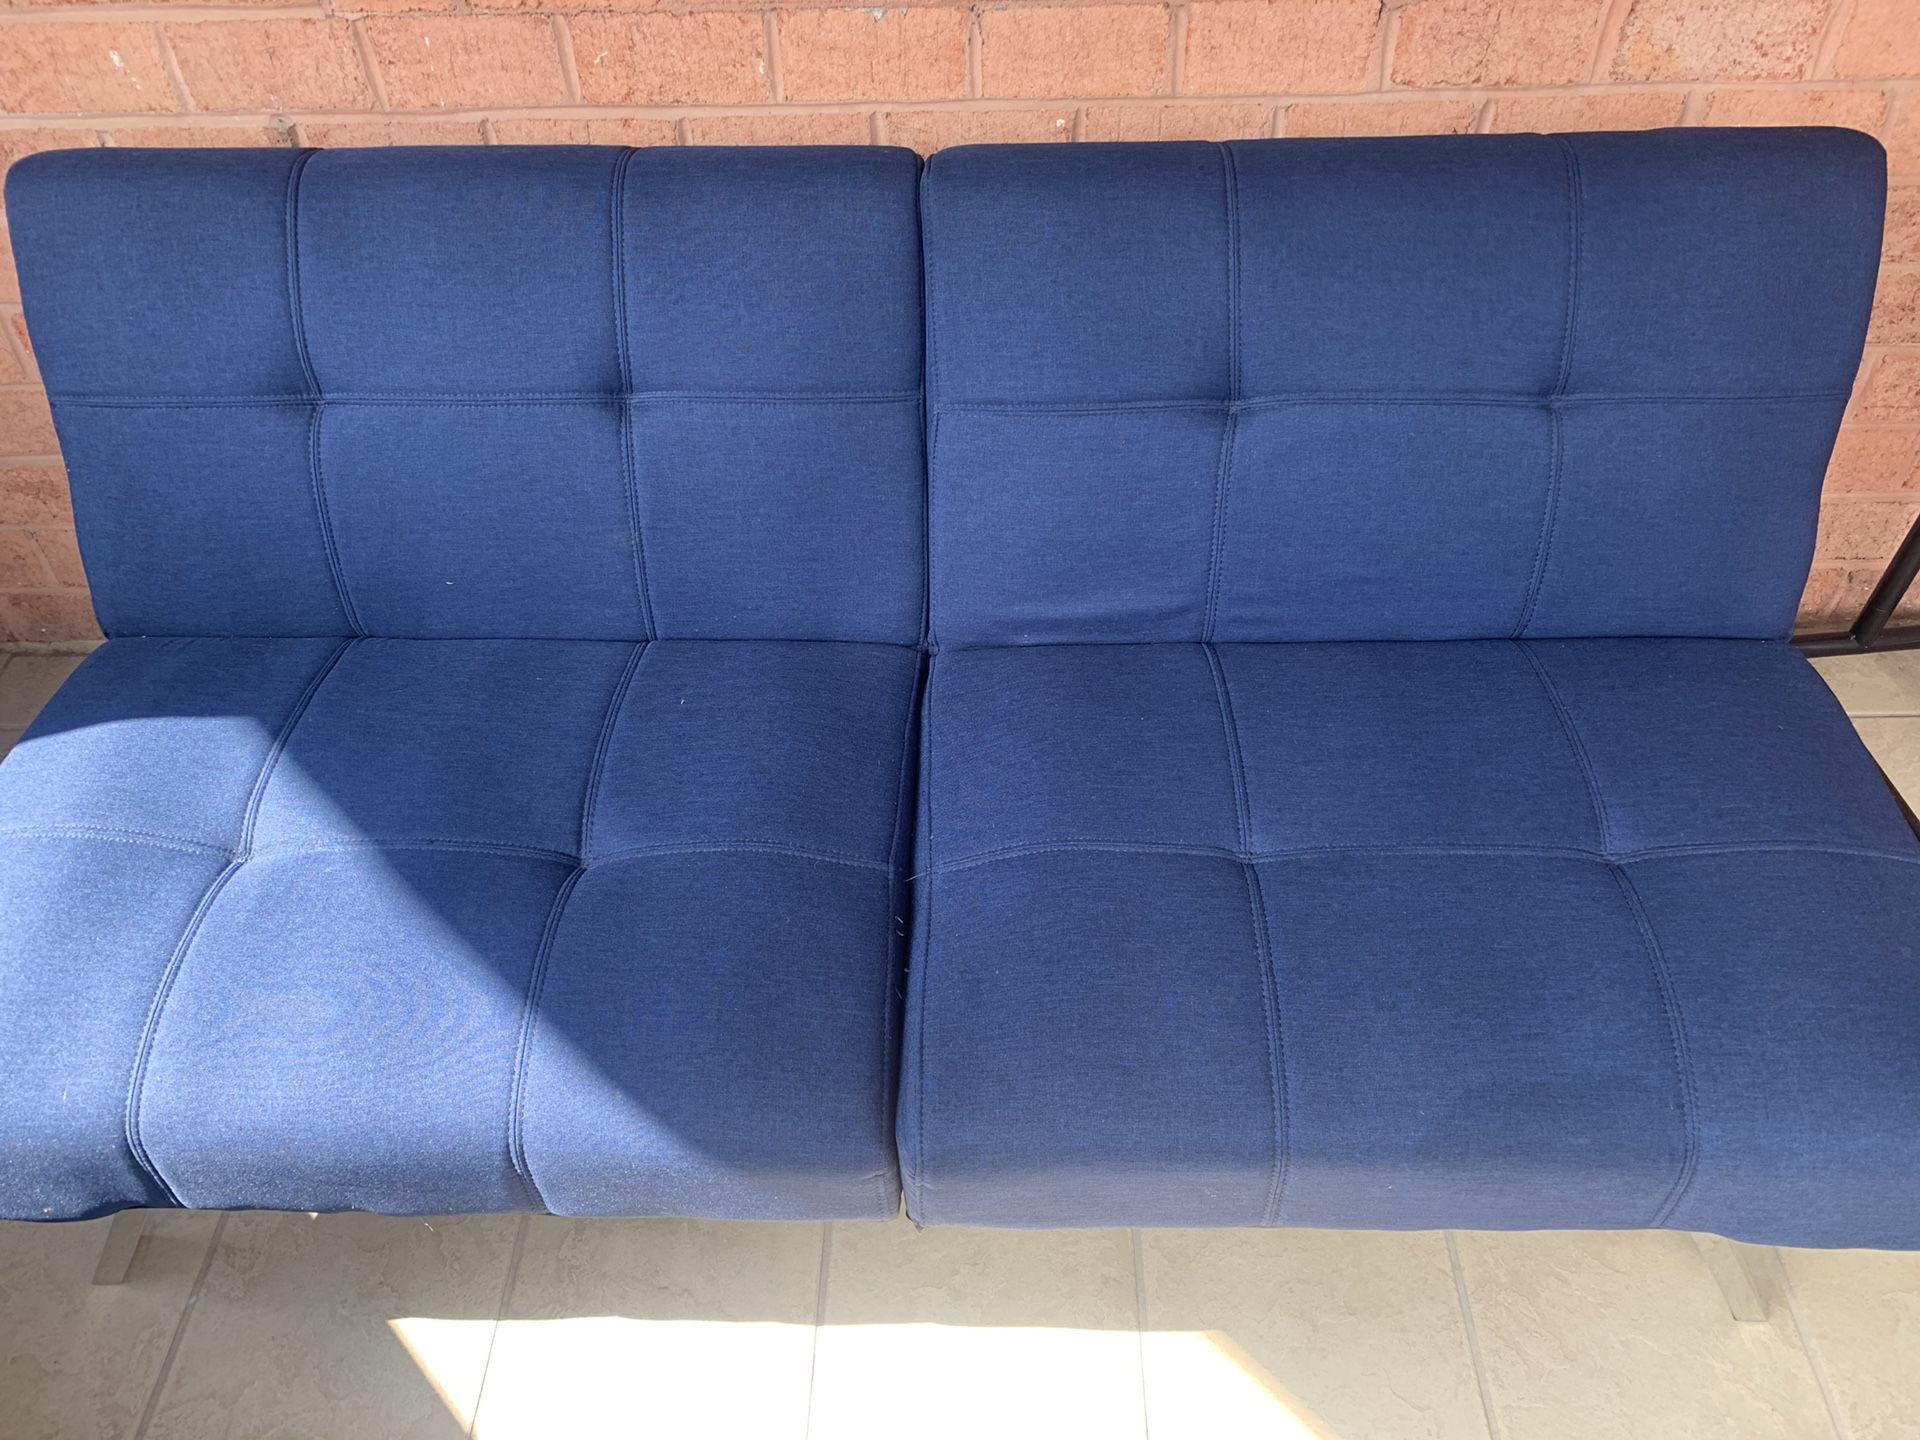 Blue futon sofa couch